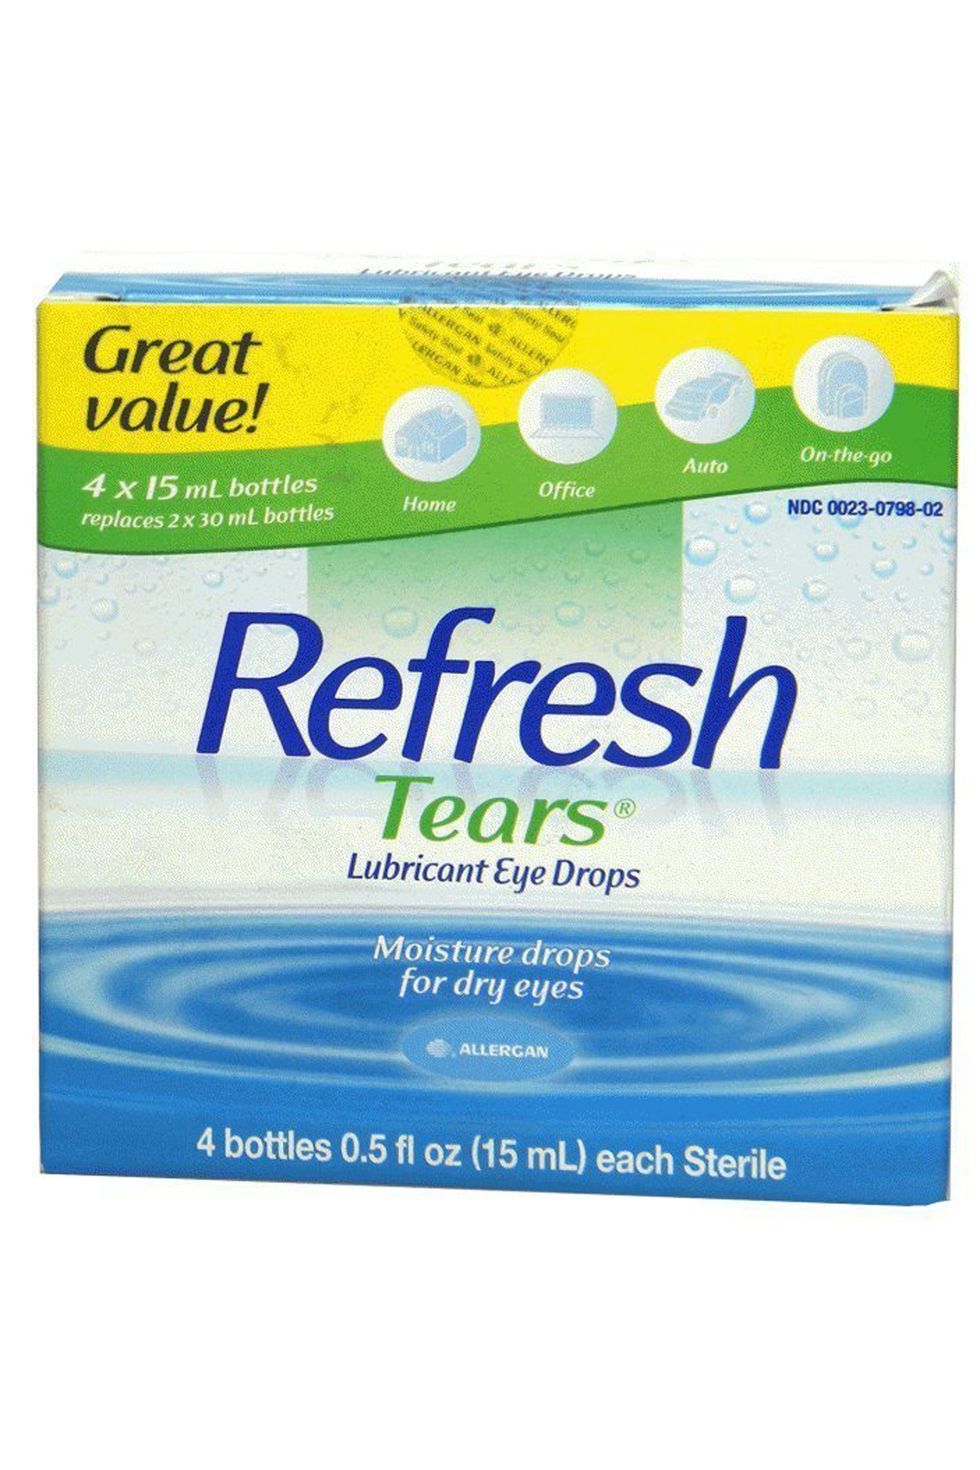 Refresh Tears Lubricant Eye Drops, Moisture Drops for Dry Eyes. 4- .5 fl oz. bottles